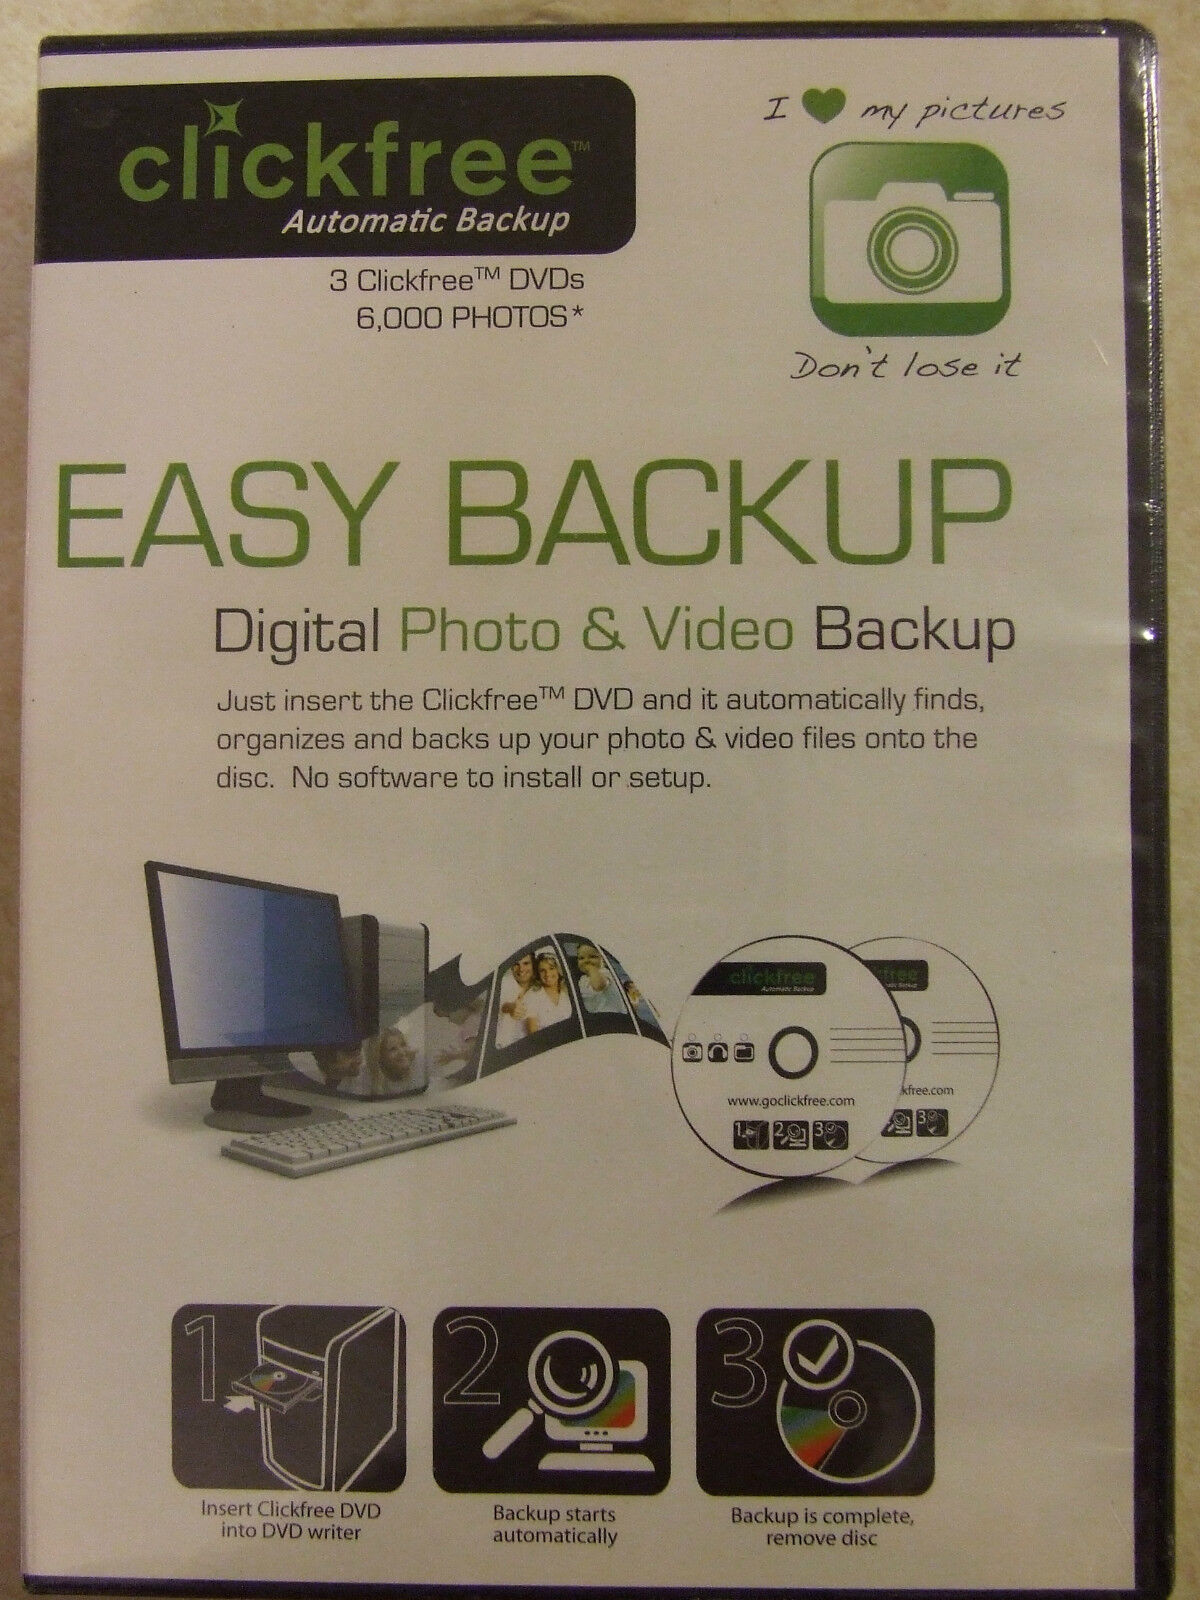 EASY BACKUP - DIGITAL PHOTO & VIDEO BACKUP by Clickfree Automatic Backup